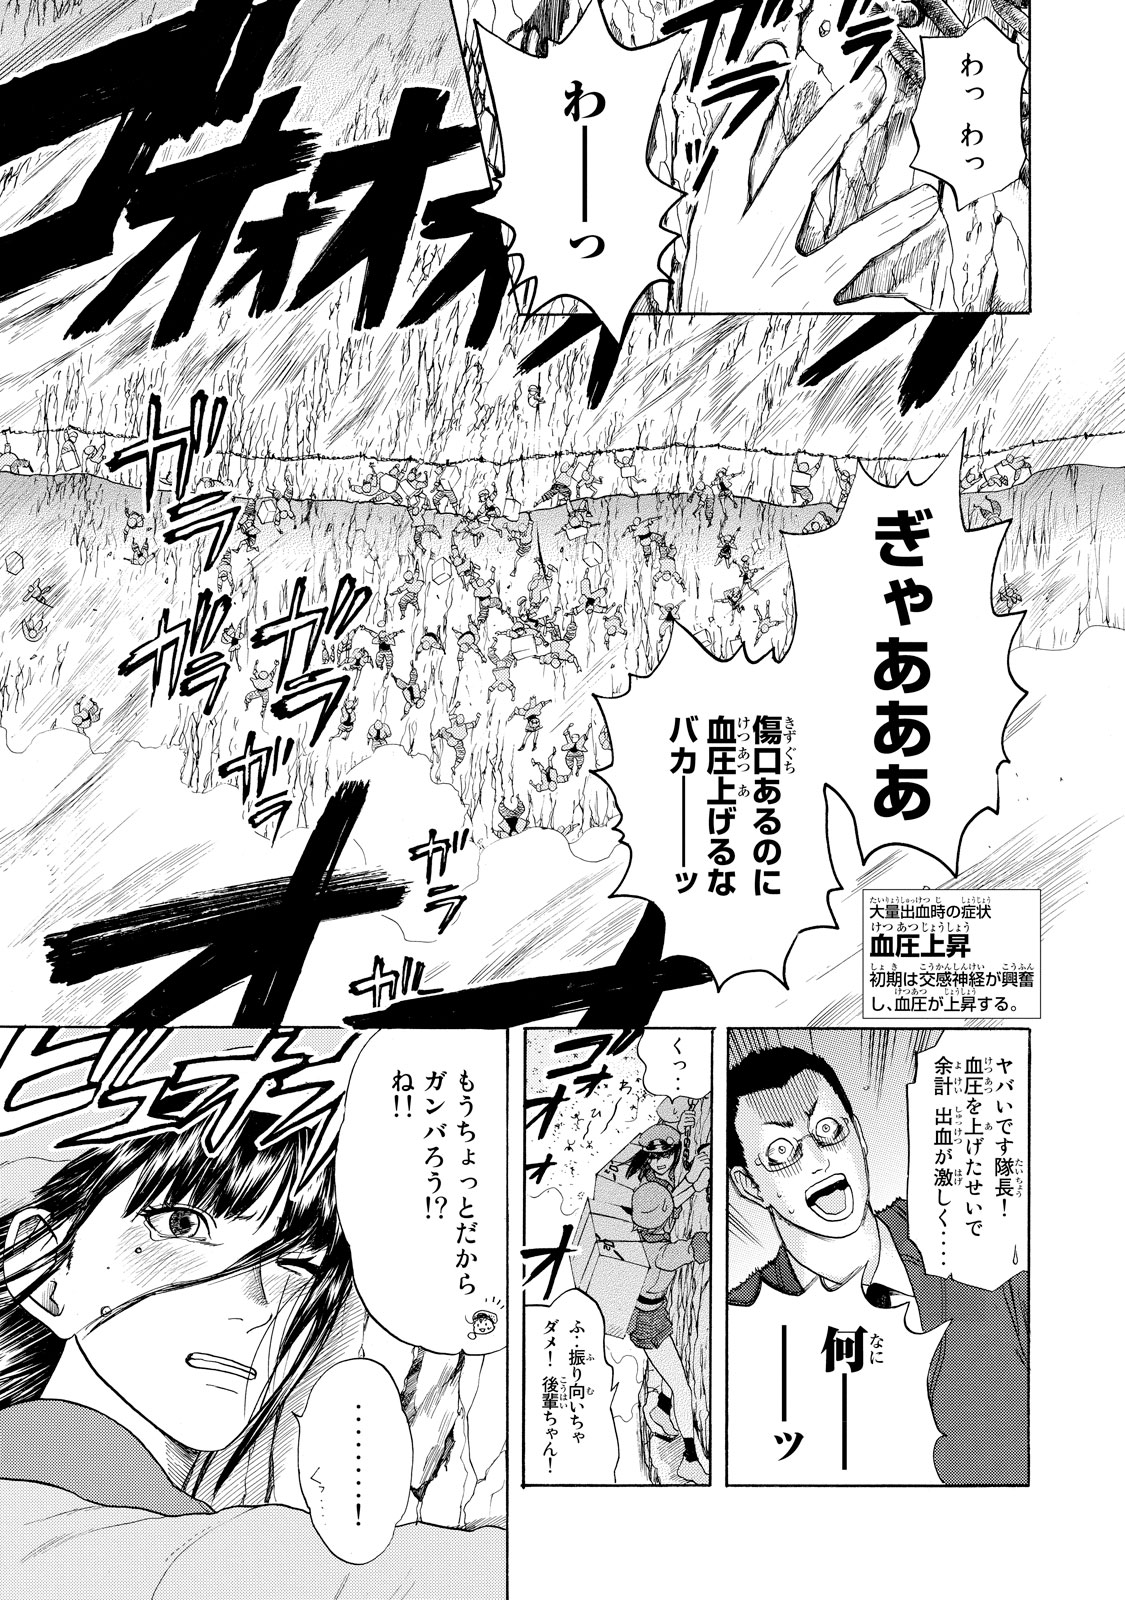 Hataraku Saibou - Chapter 18 - Page 9